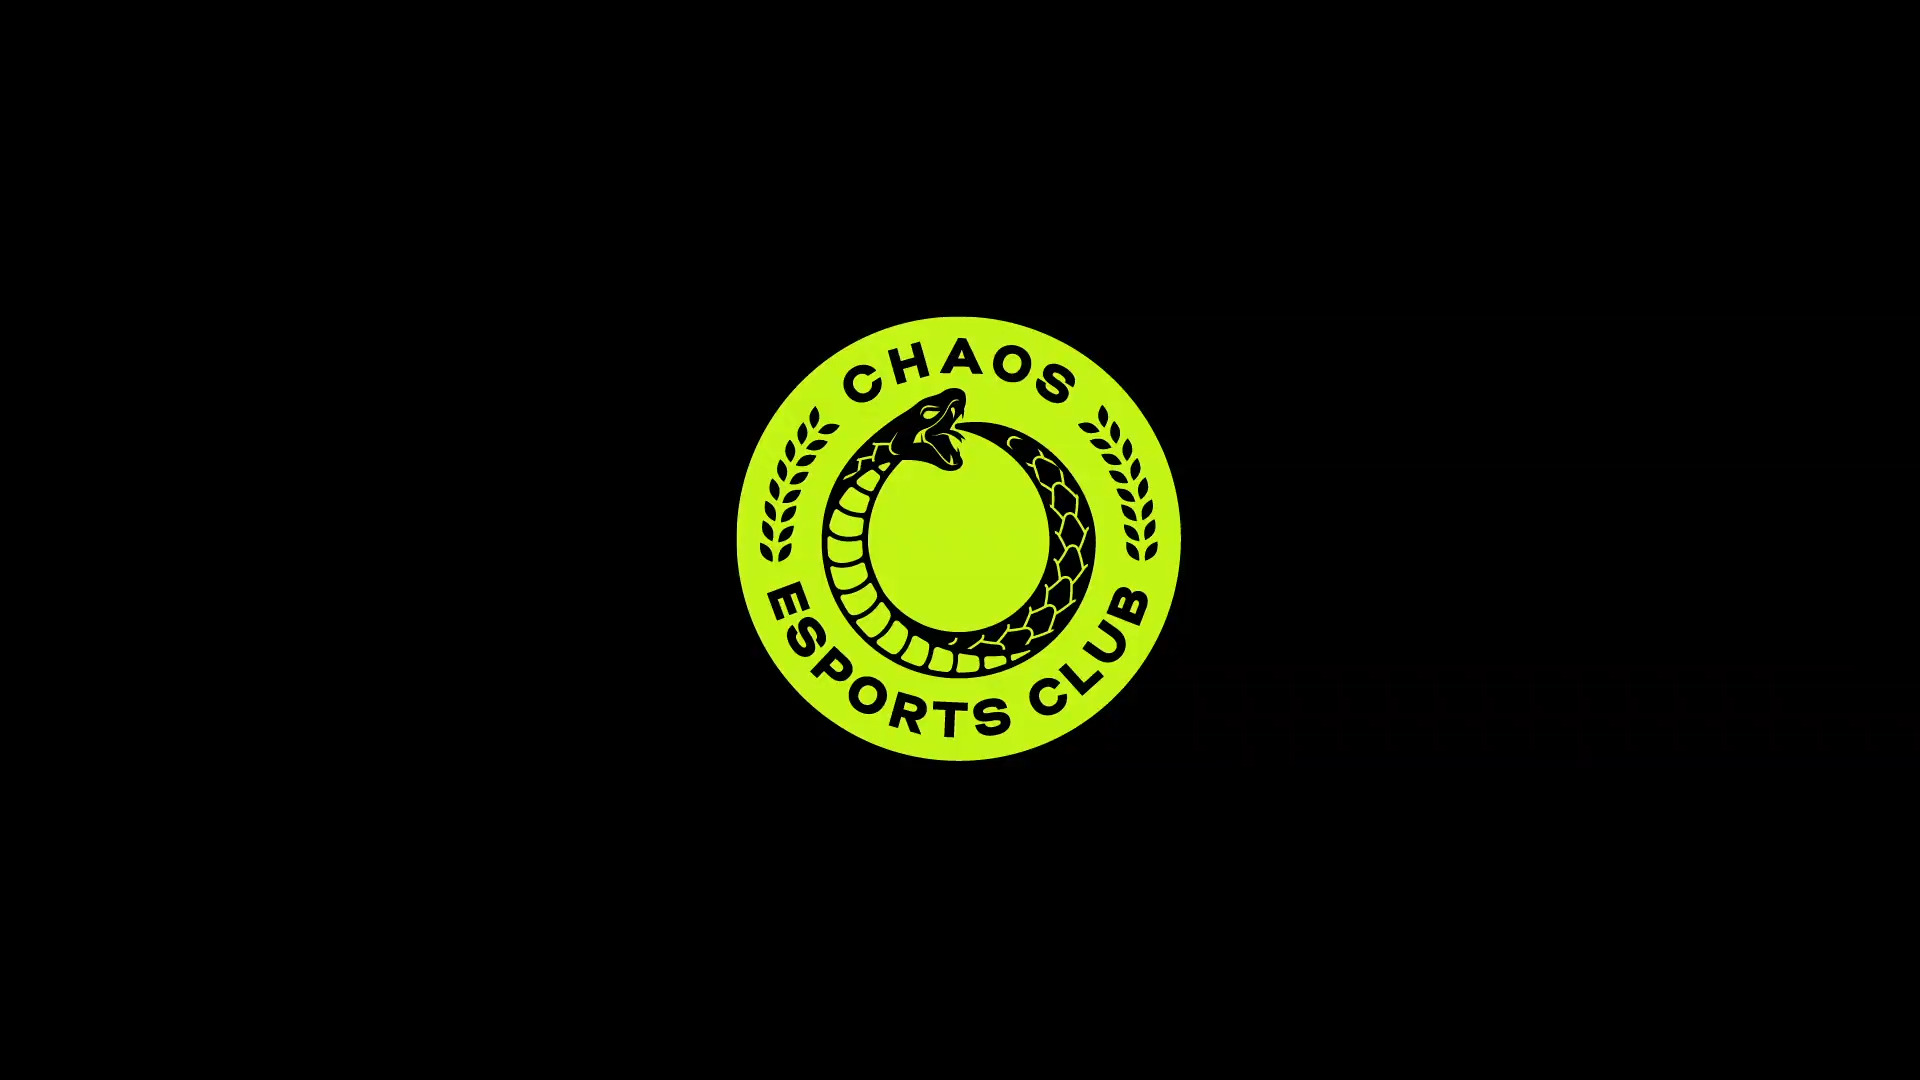 CS:GO – Chaos EC Confirm Rumors That They’ll Need To Drop Their CS:GO Team After Impressive Season